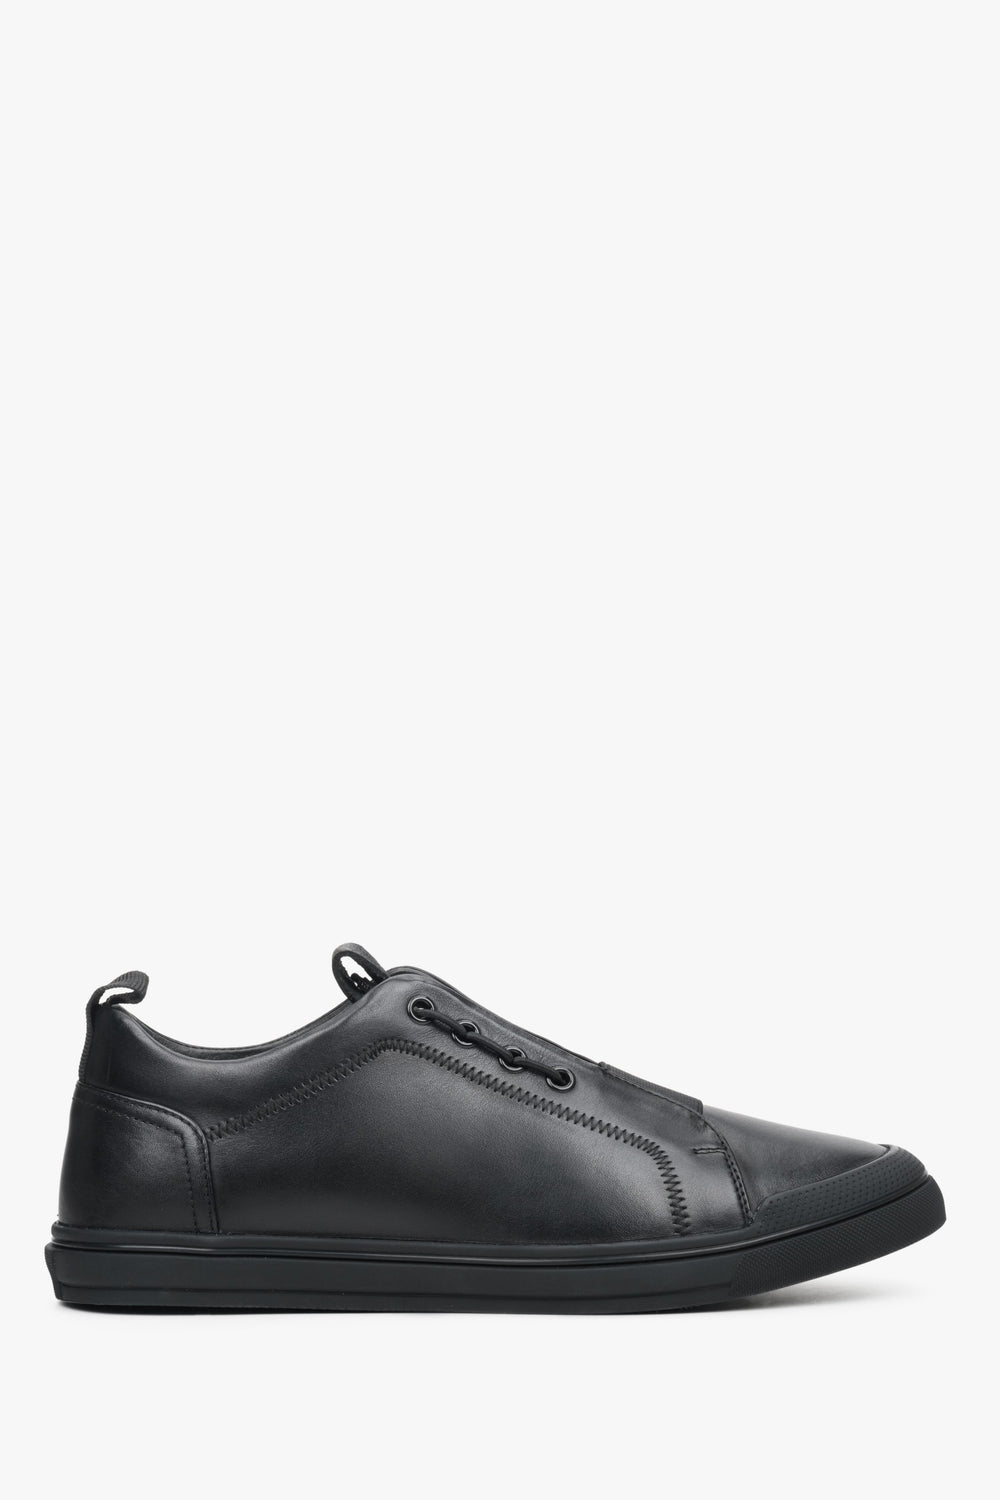 Men's Black Sneakers made of Genuine Leather ES 8 ER00112391.